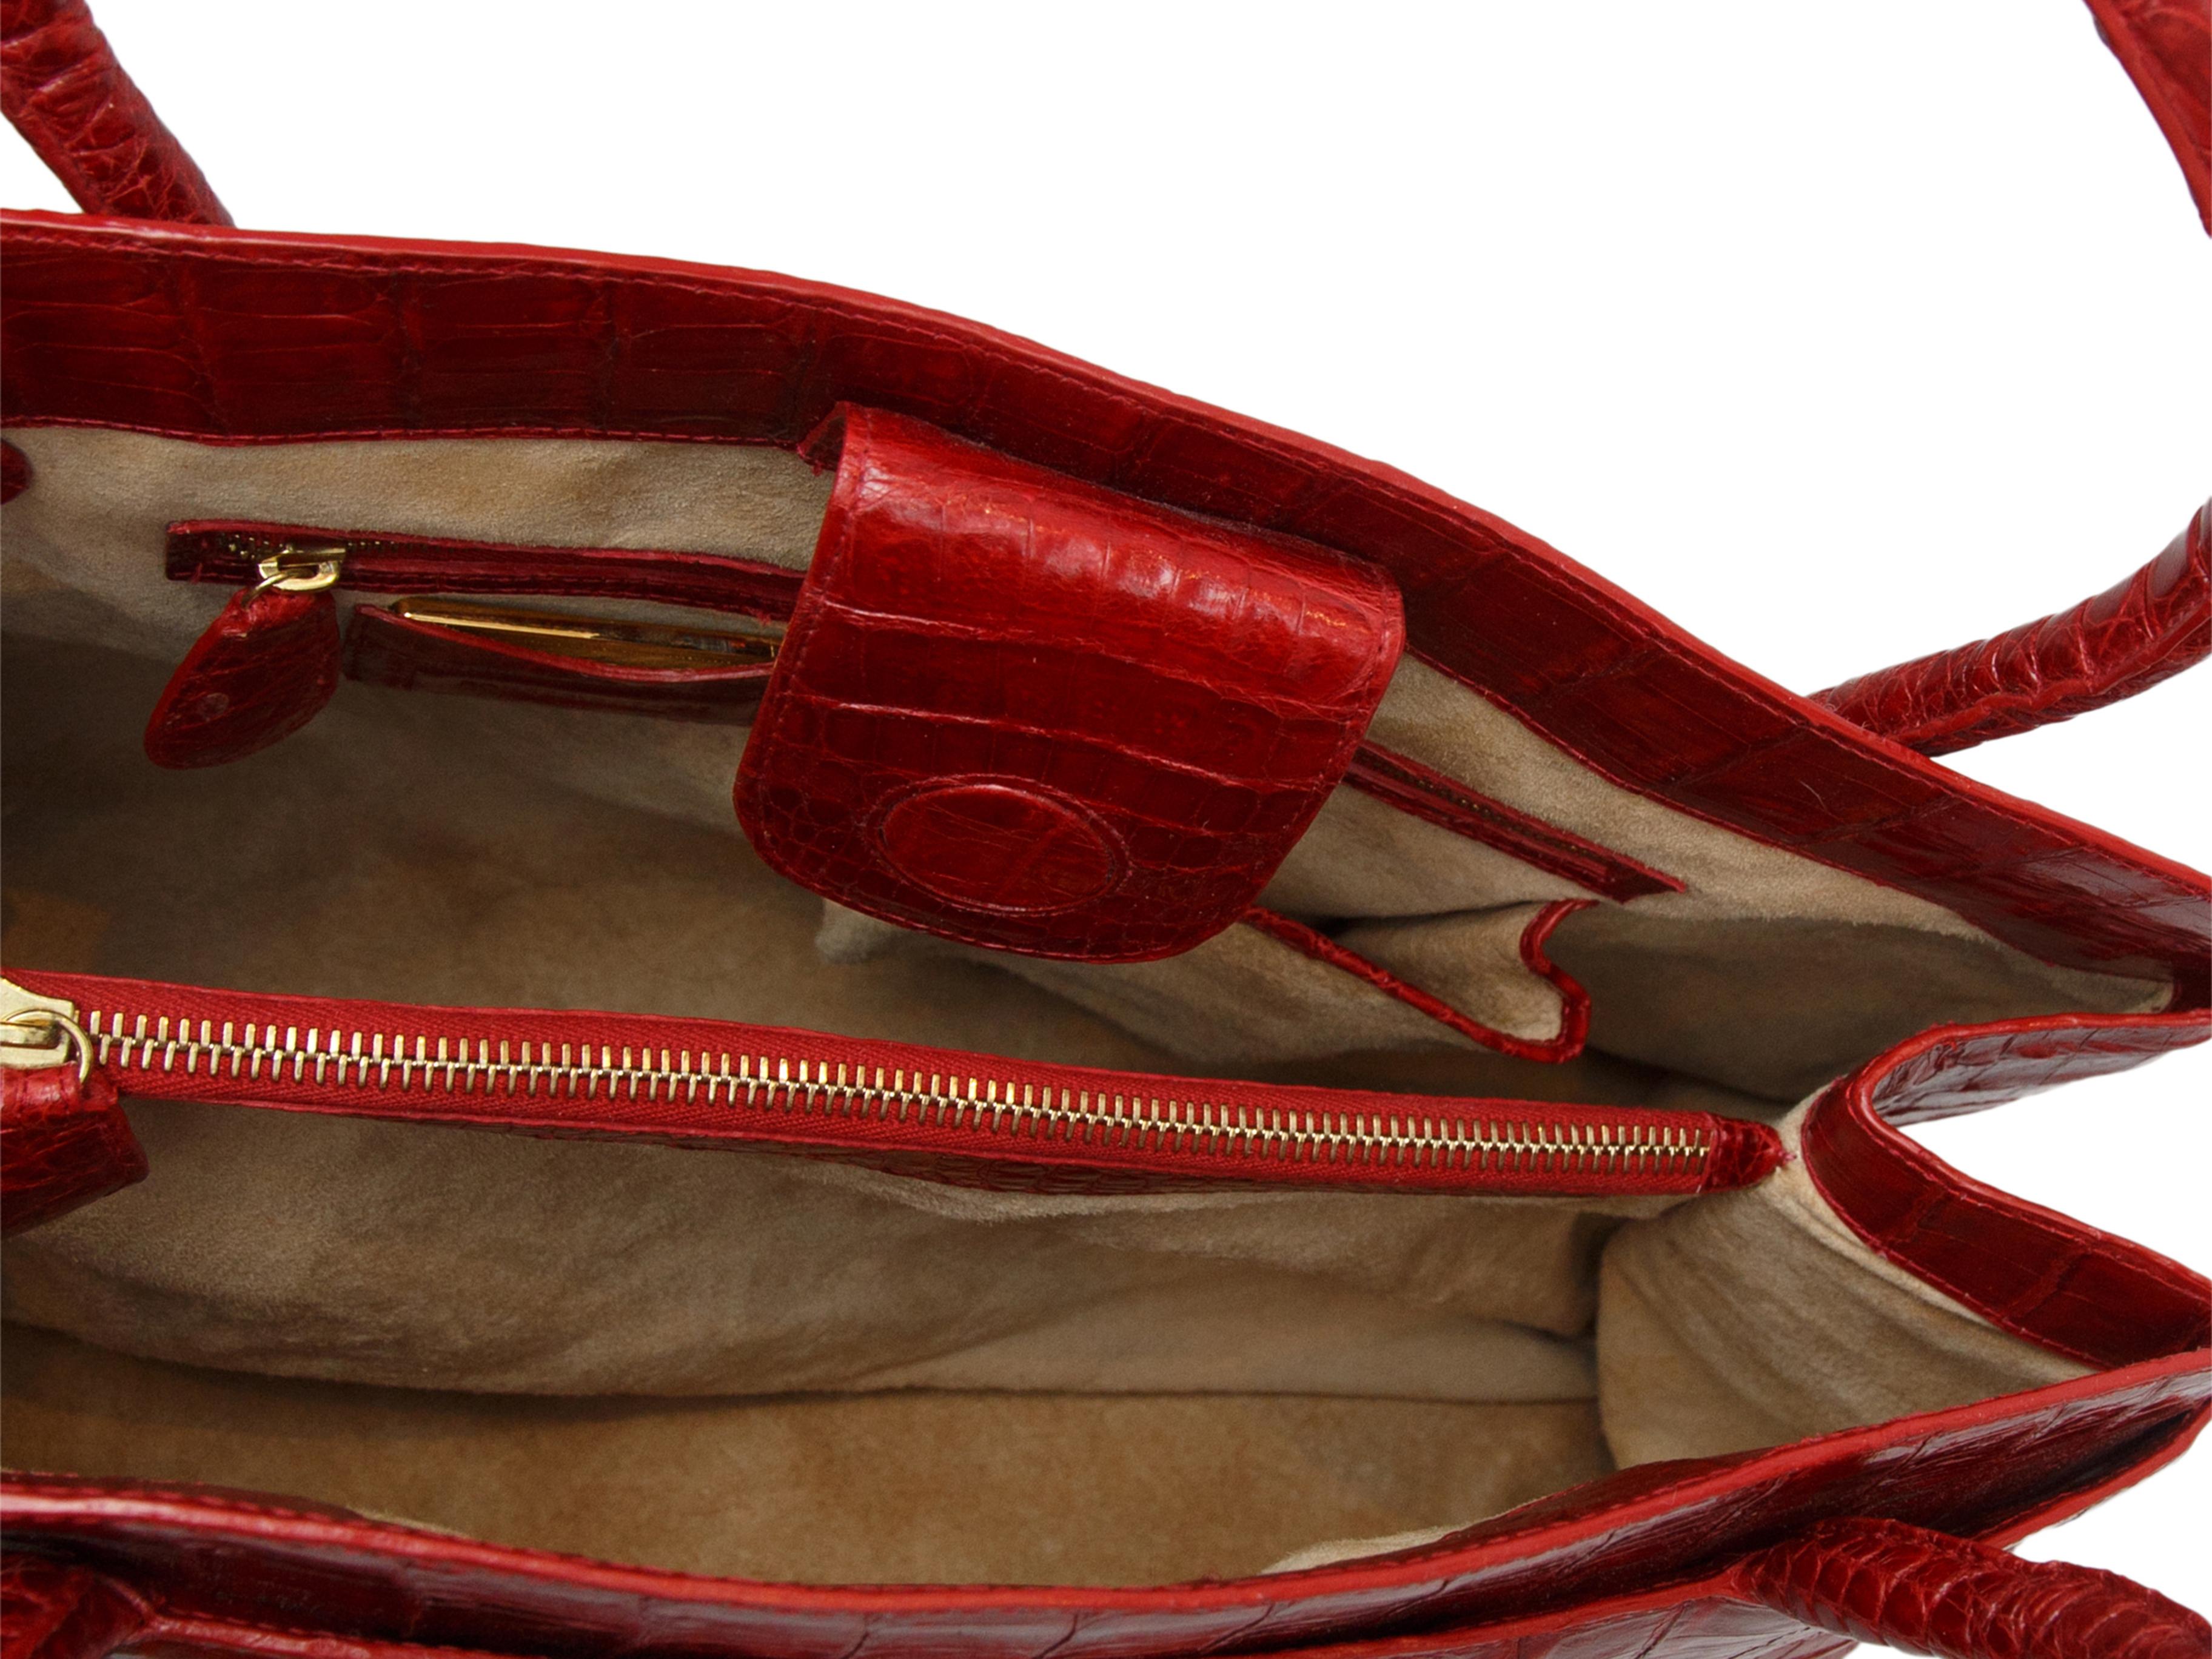 Product details: Red crocodile handbag by Nancy Gonzalez. Dual top handles. Interior zip pocket. Magnetic closure at top. 14